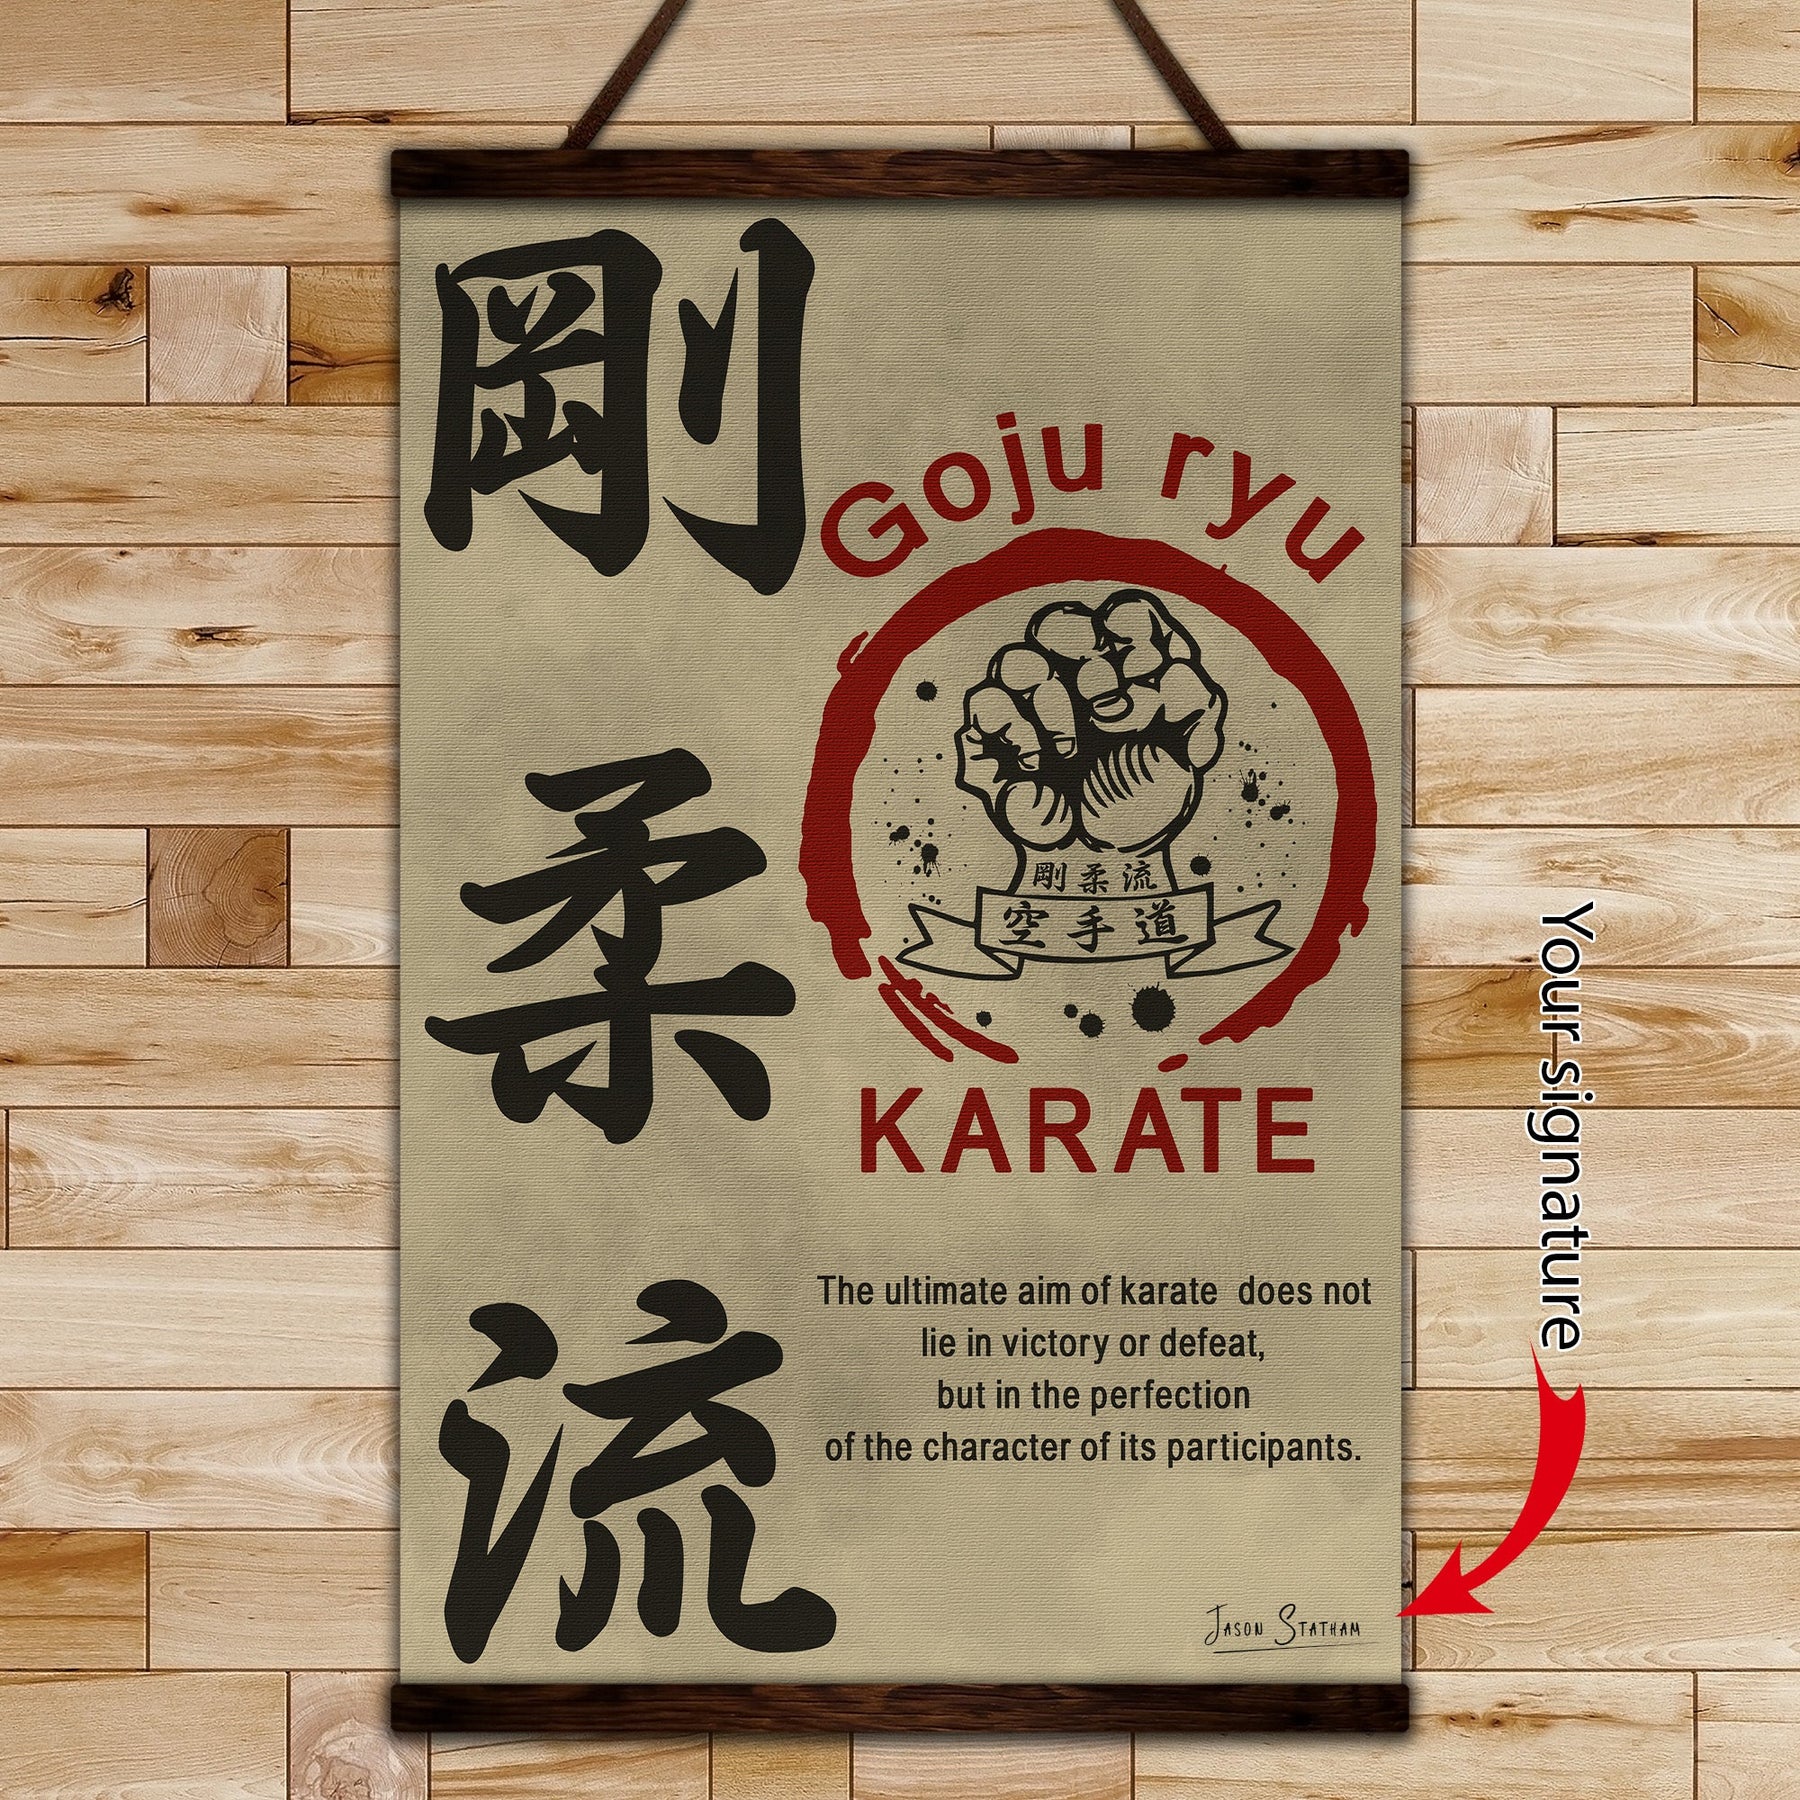 KA005 - The Ultimate Aim Of Karate - Goju ryu Karate - Vertical Poster - Vertical Canvas - Karate Poster